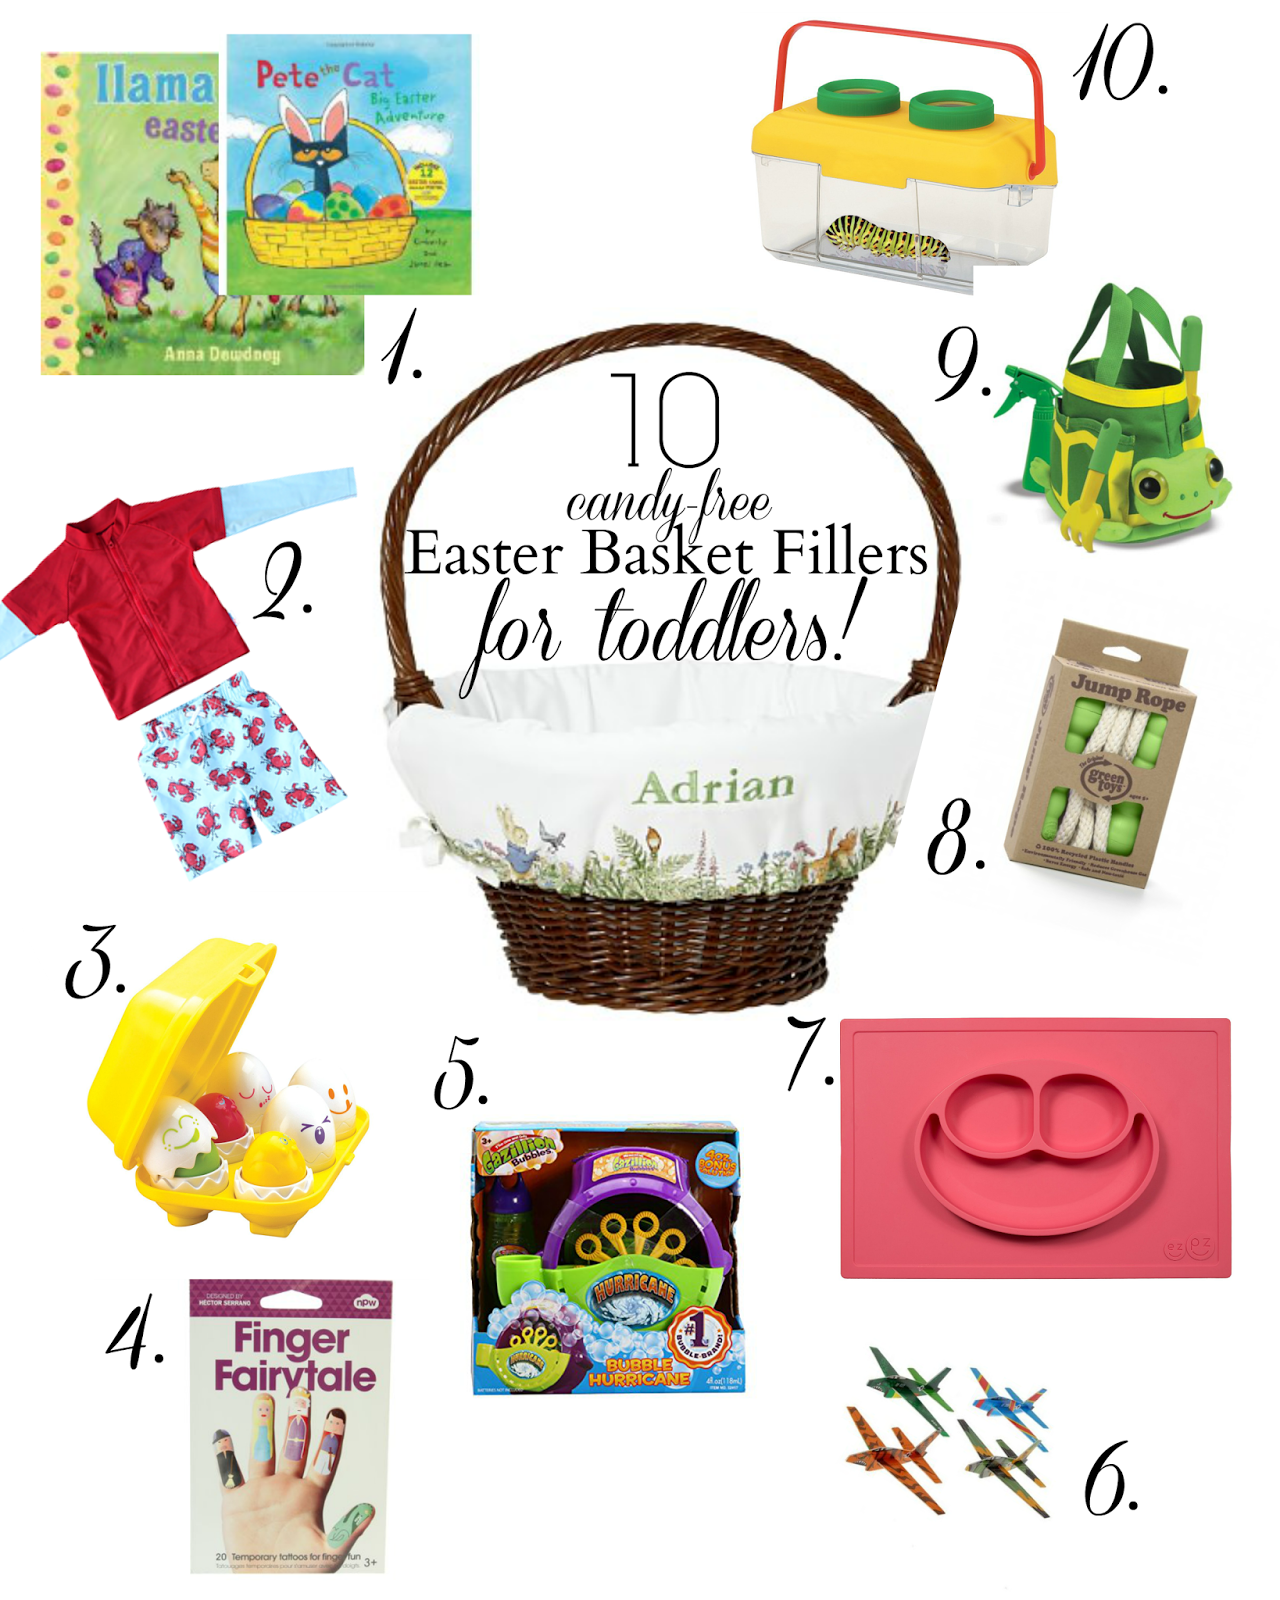 I Love You More Than Carrots: 10 Easter Basket Filler Ideas for